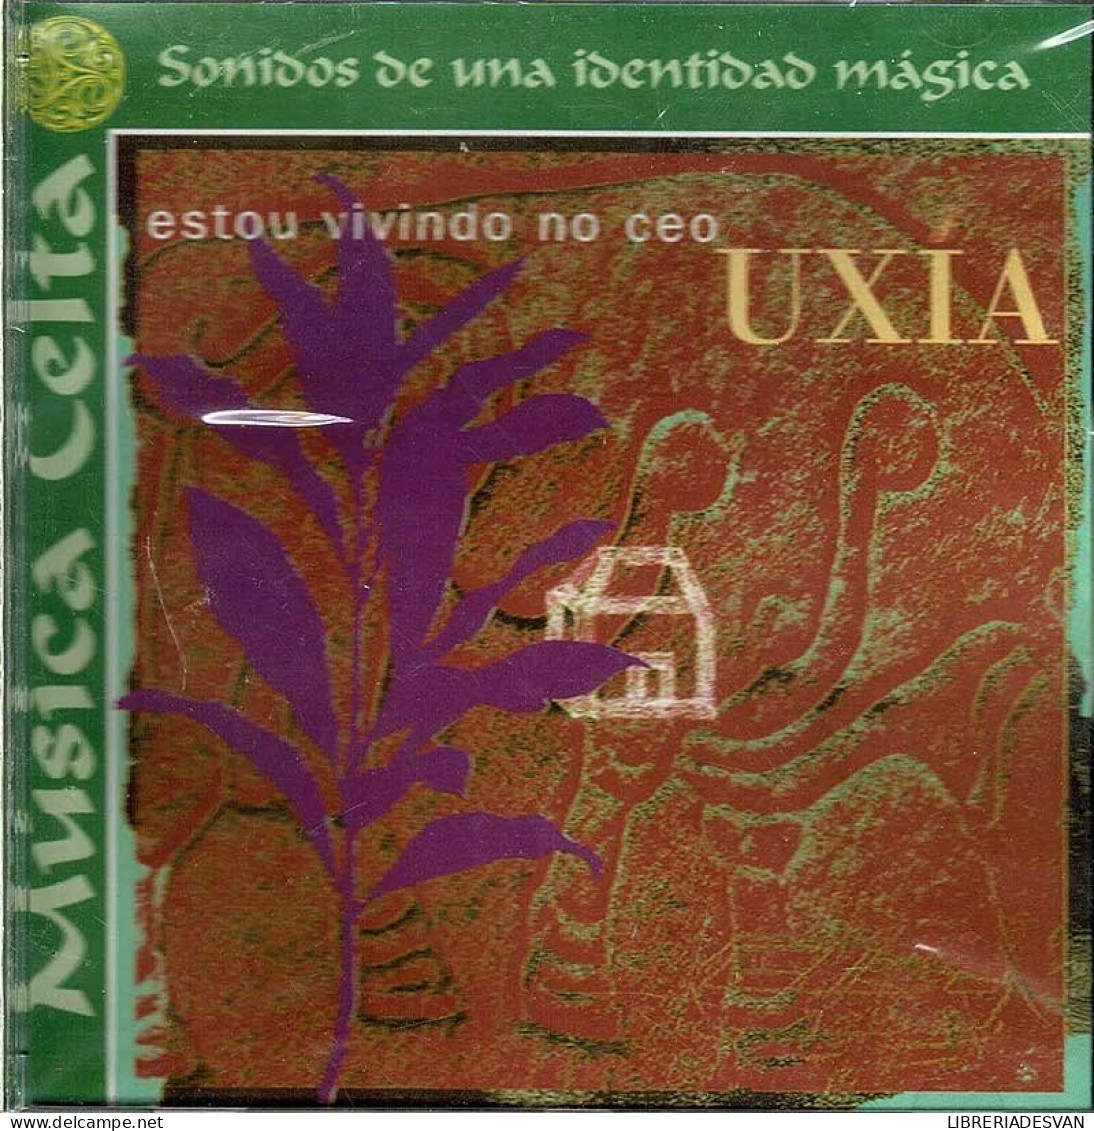 Uxia - Estou Vivindo No Ceo. CD - Country & Folk